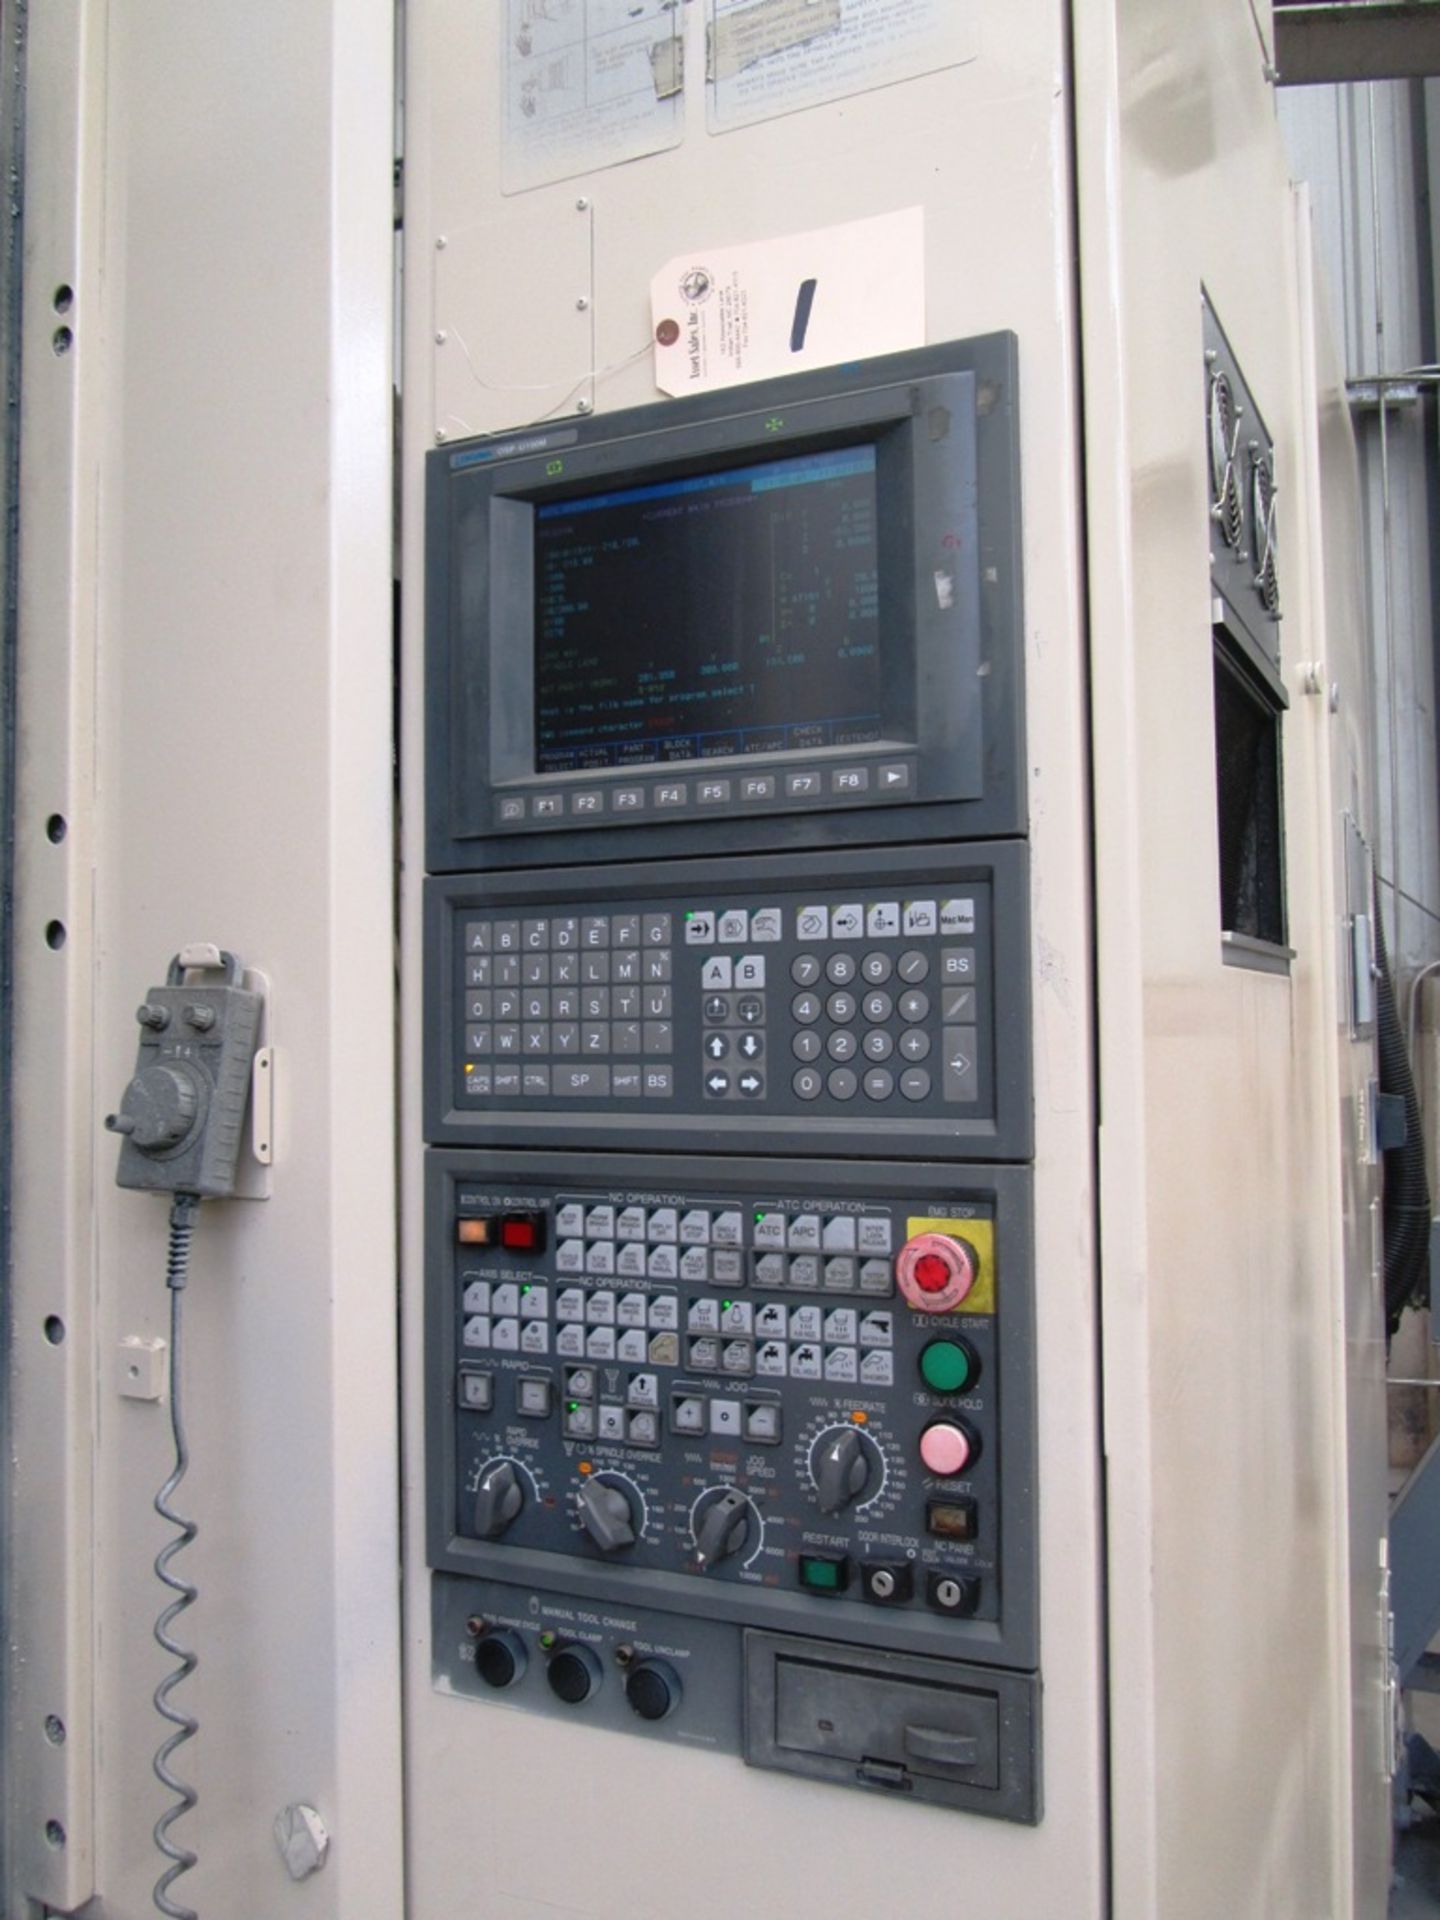 Okuma MX-50HB 4-Axis CNC Horizontal Machining Center - Image 2 of 5